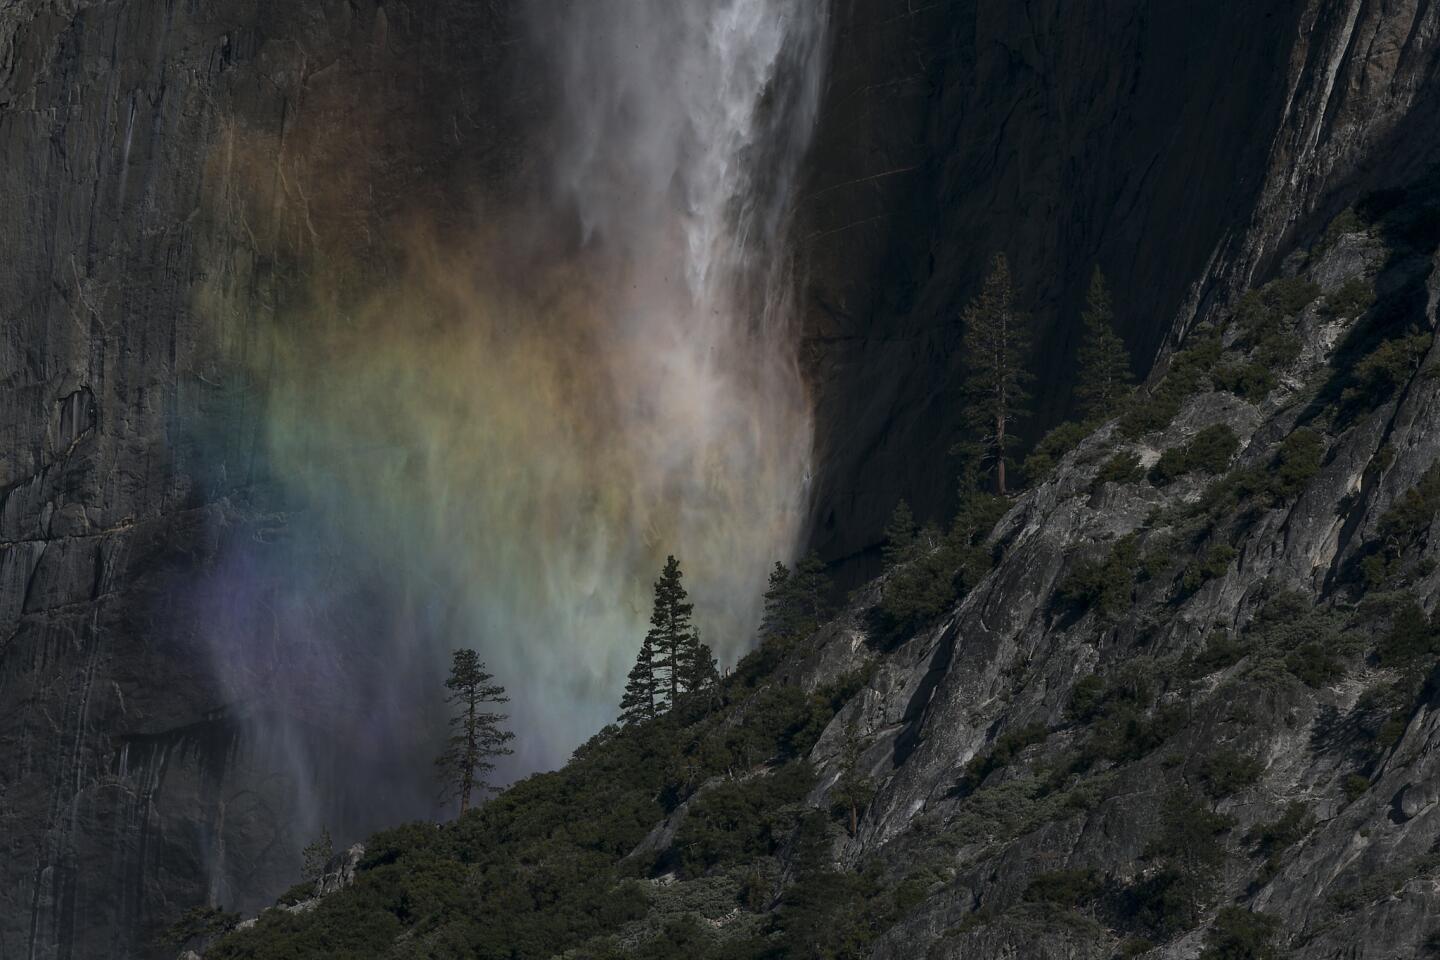 Dryer season expected in Yosemite